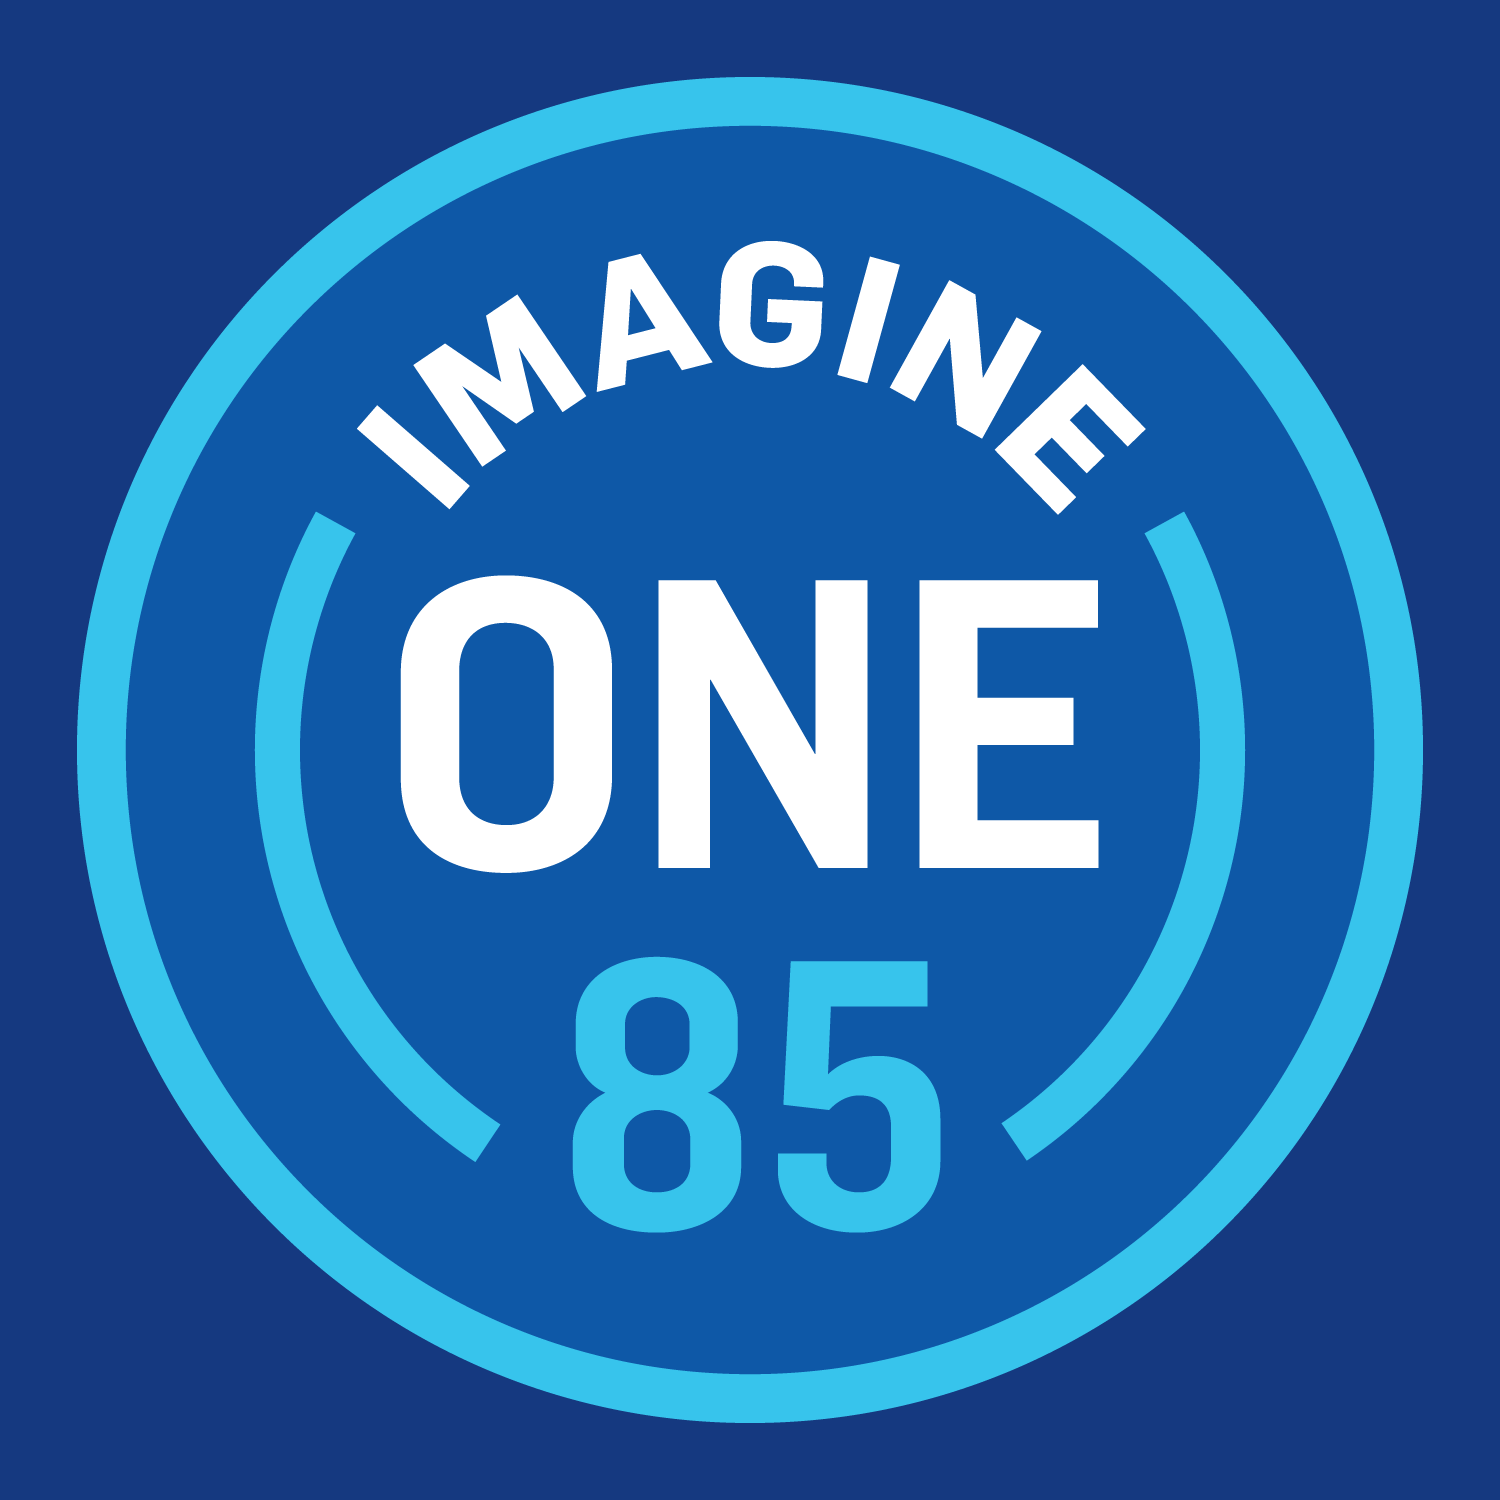 ImagineOne85_Profile-Image.png